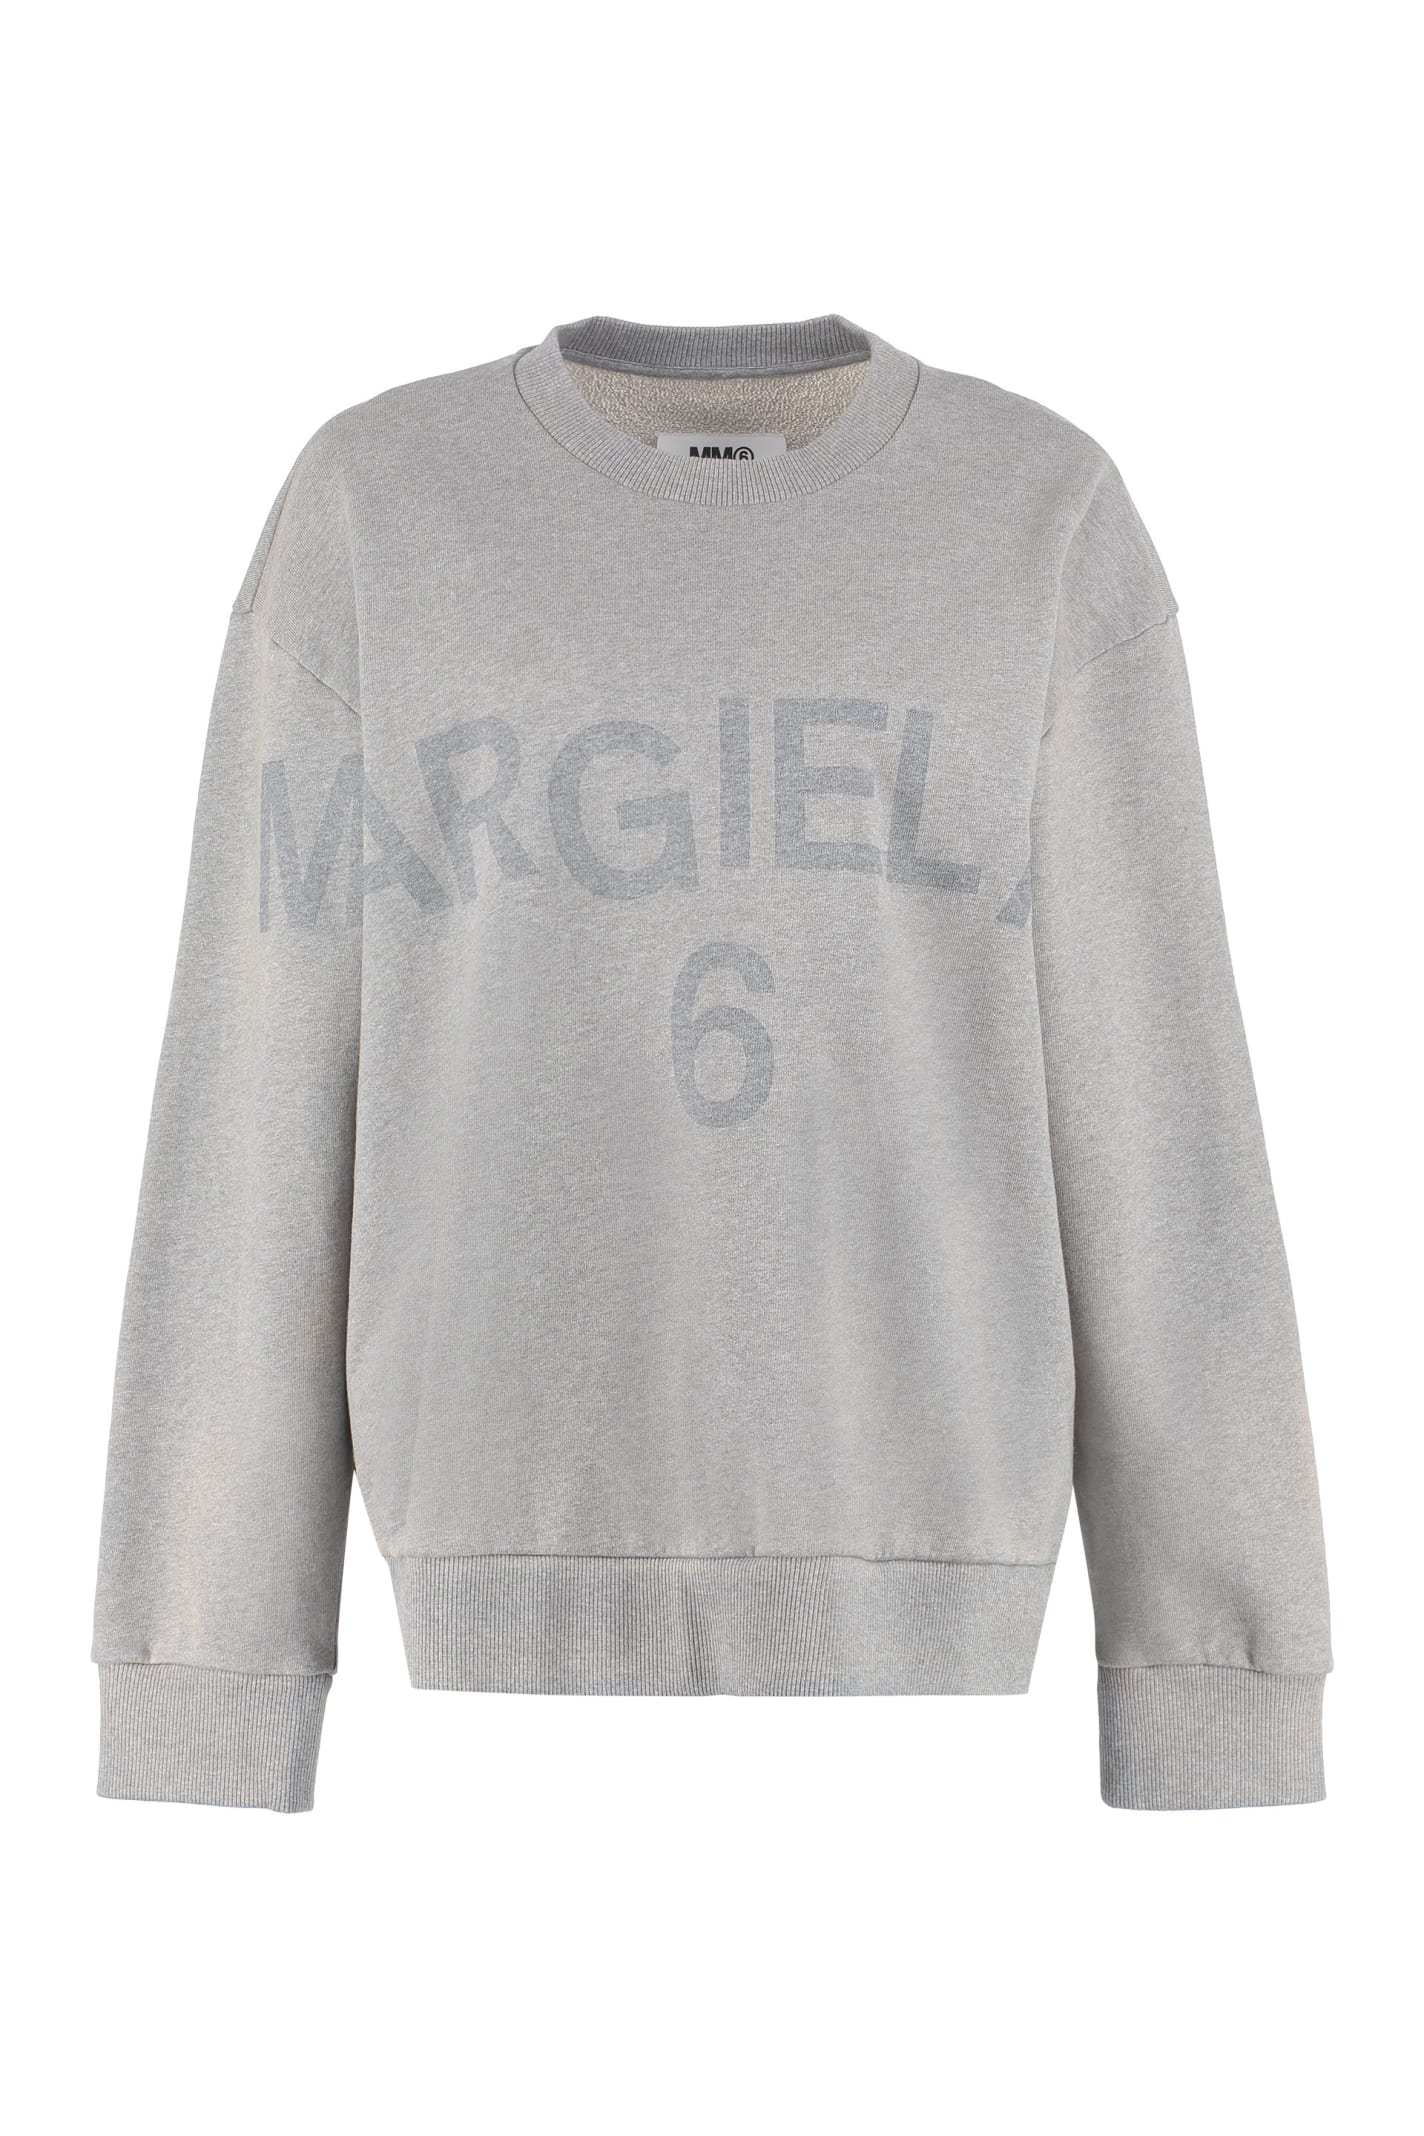 MM6 Maison Margiela Logo Detail Cotton Sweatshirt